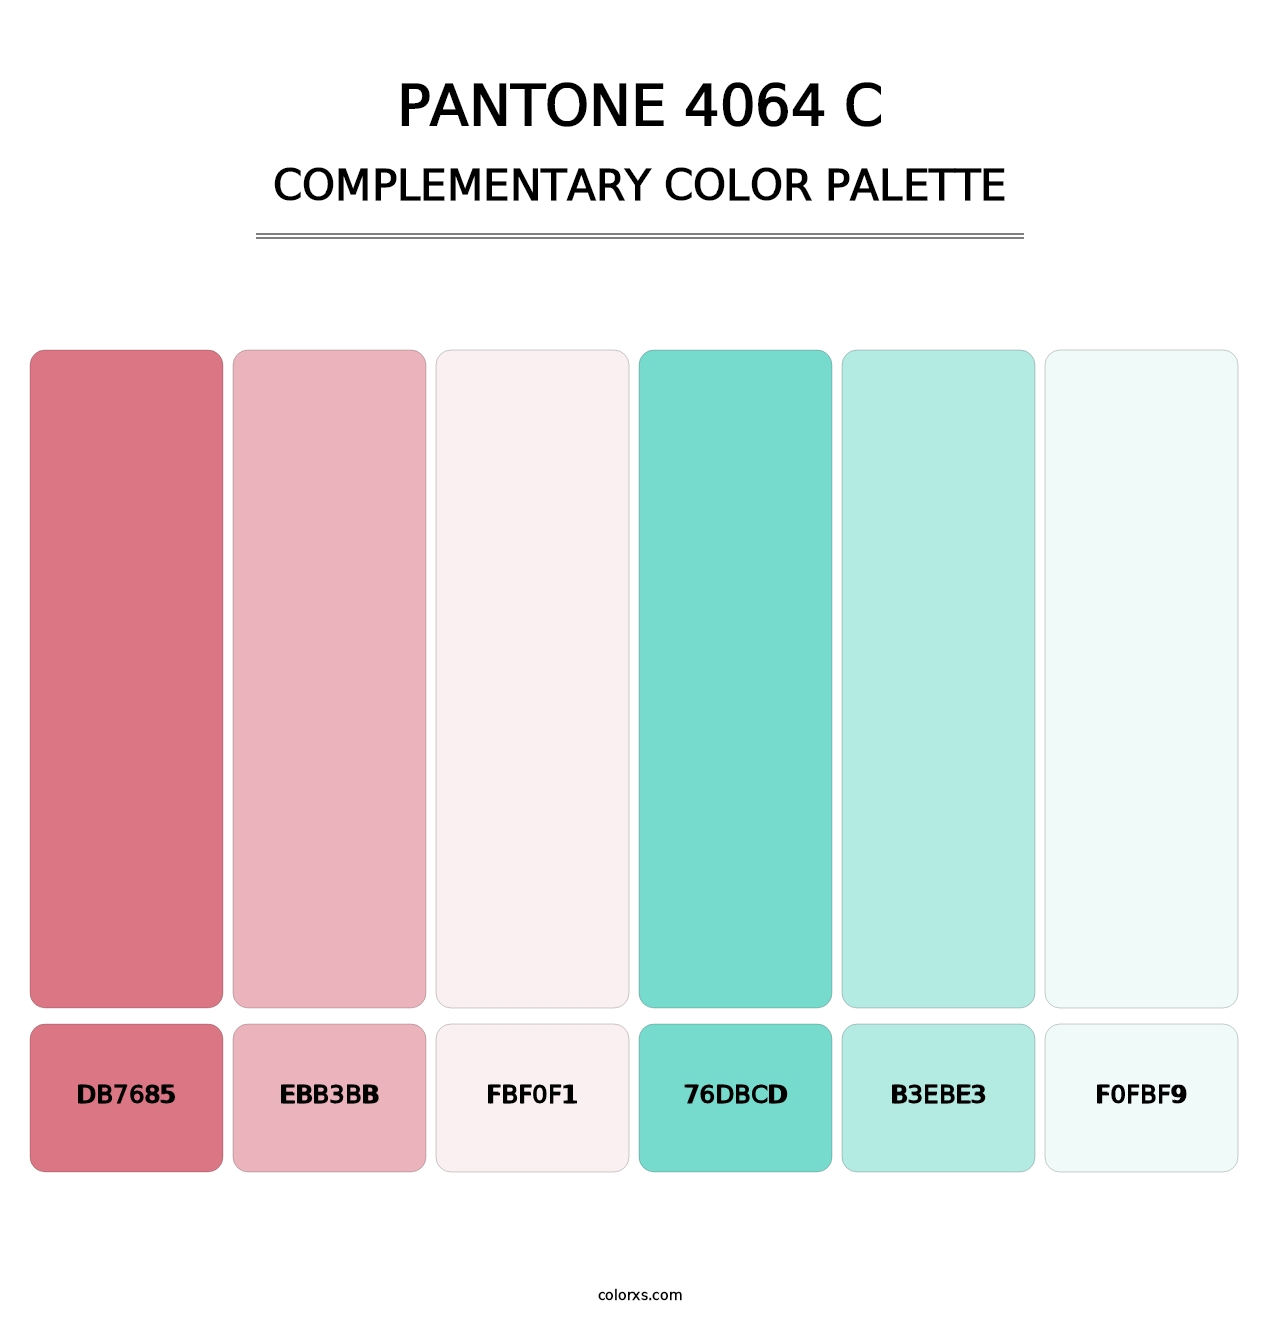 PANTONE 4064 C - Complementary Color Palette